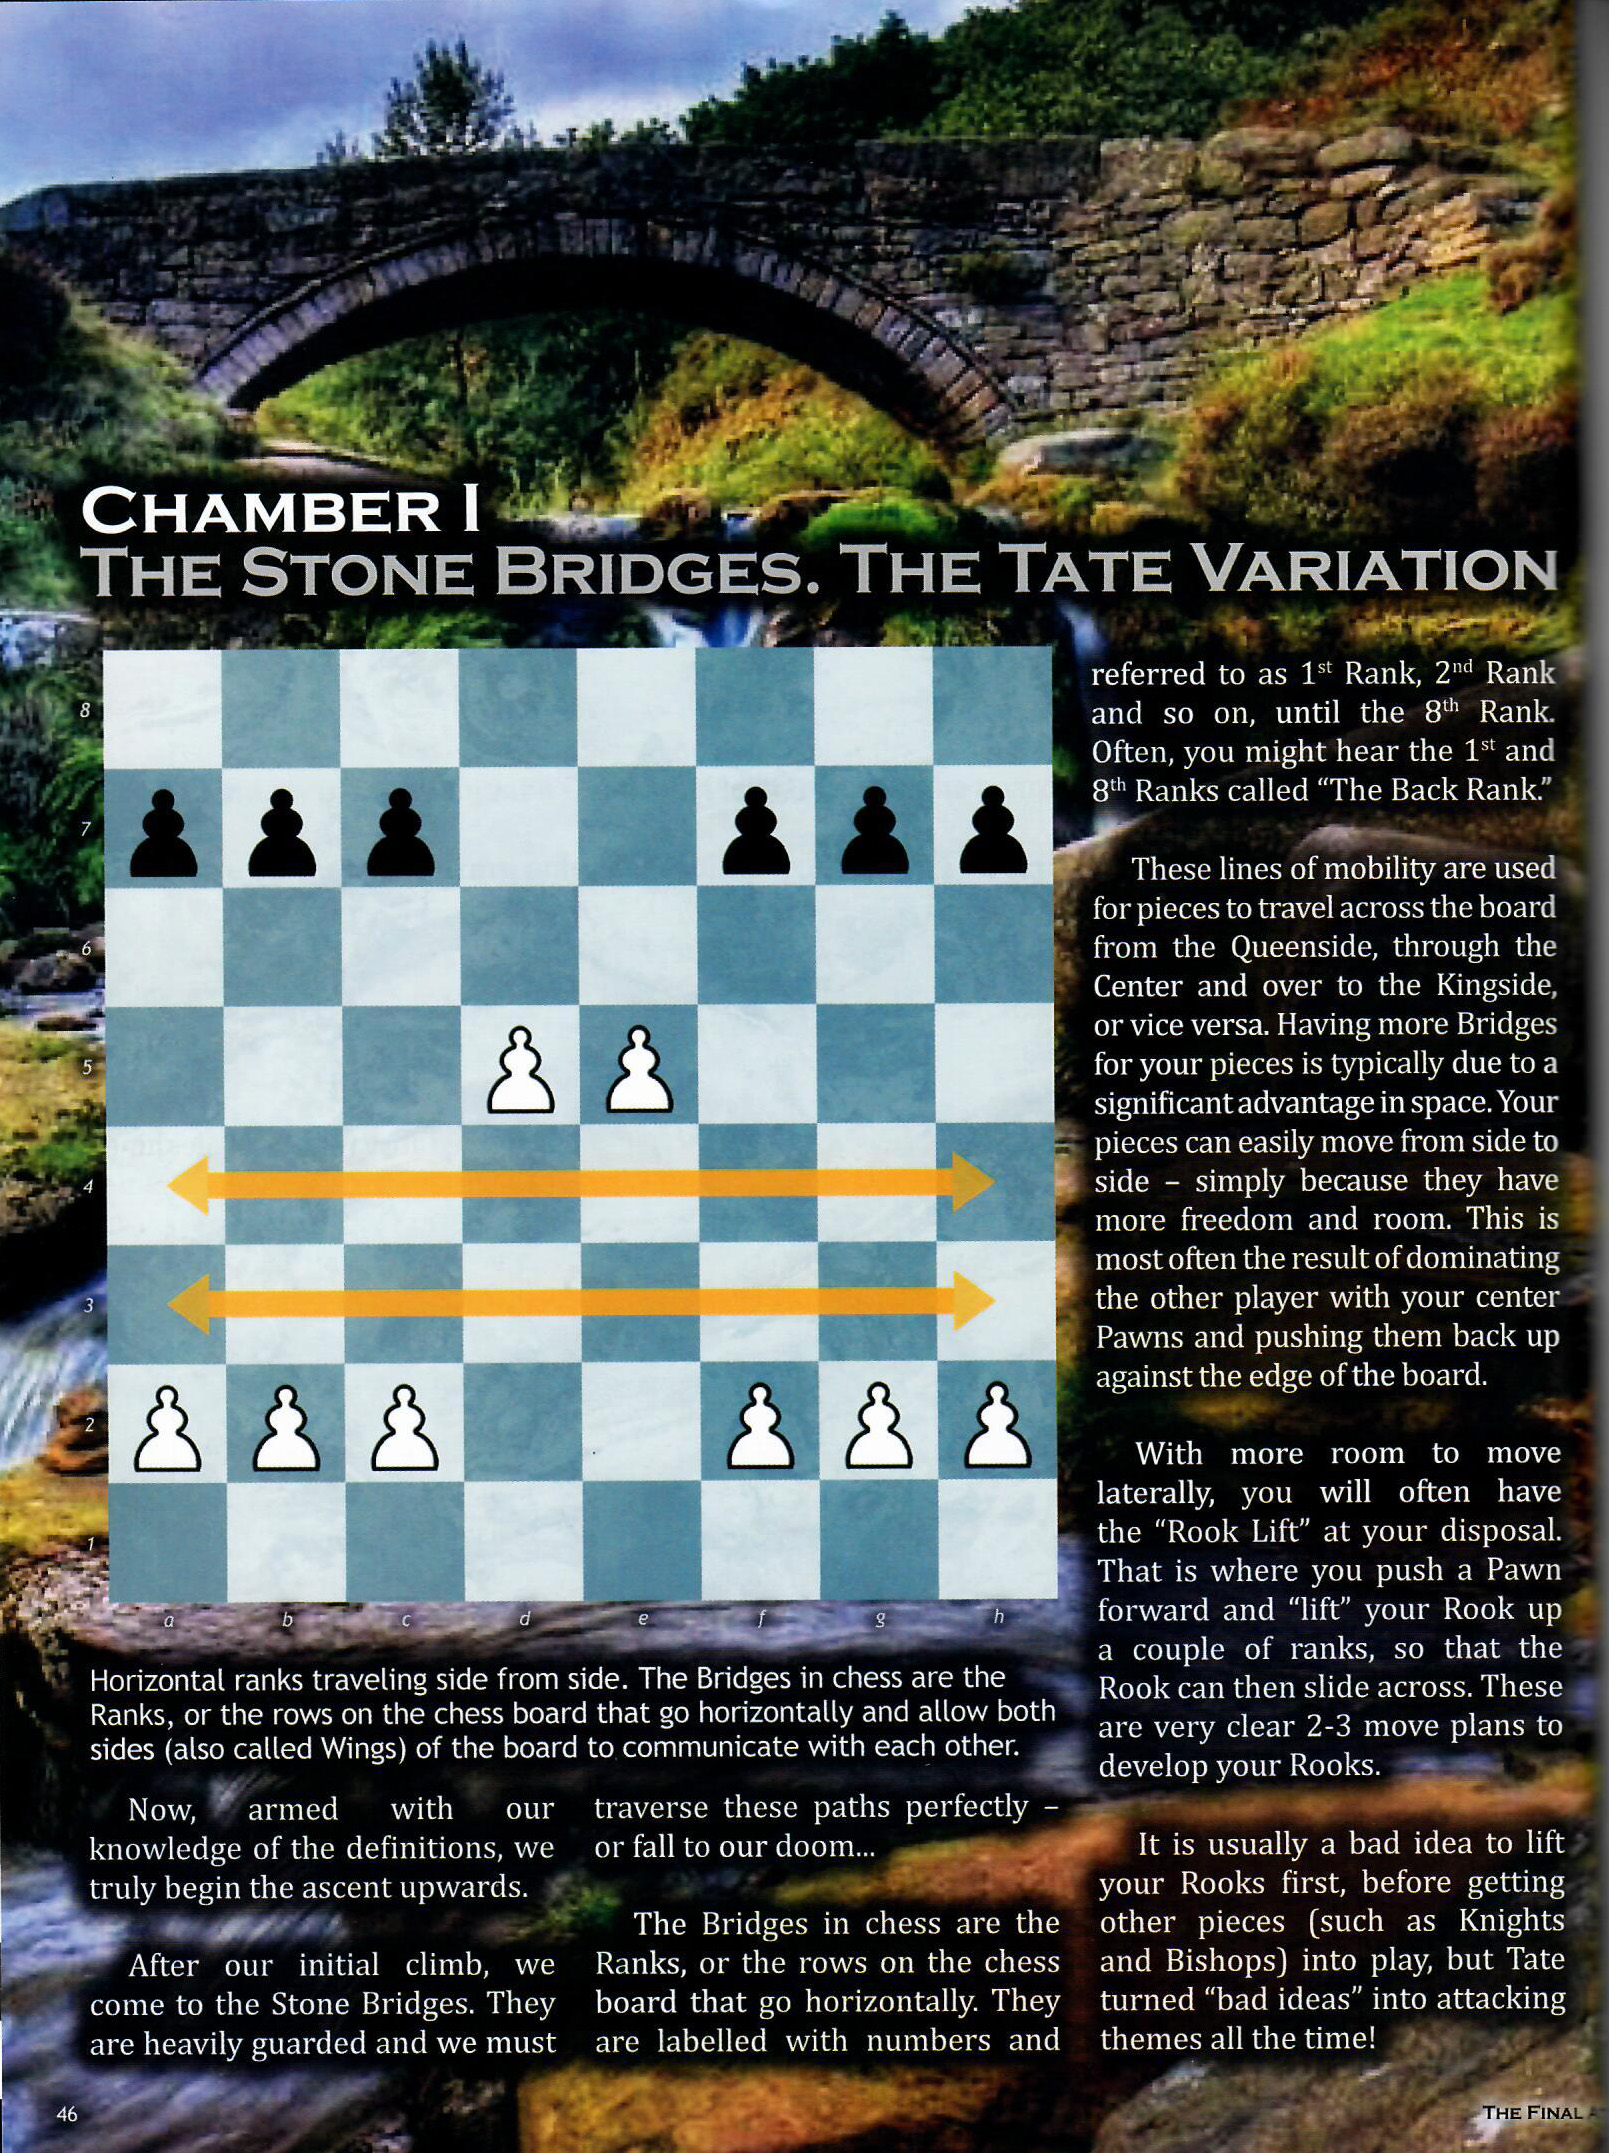 IM Emory Tate – Daily Chess Musings